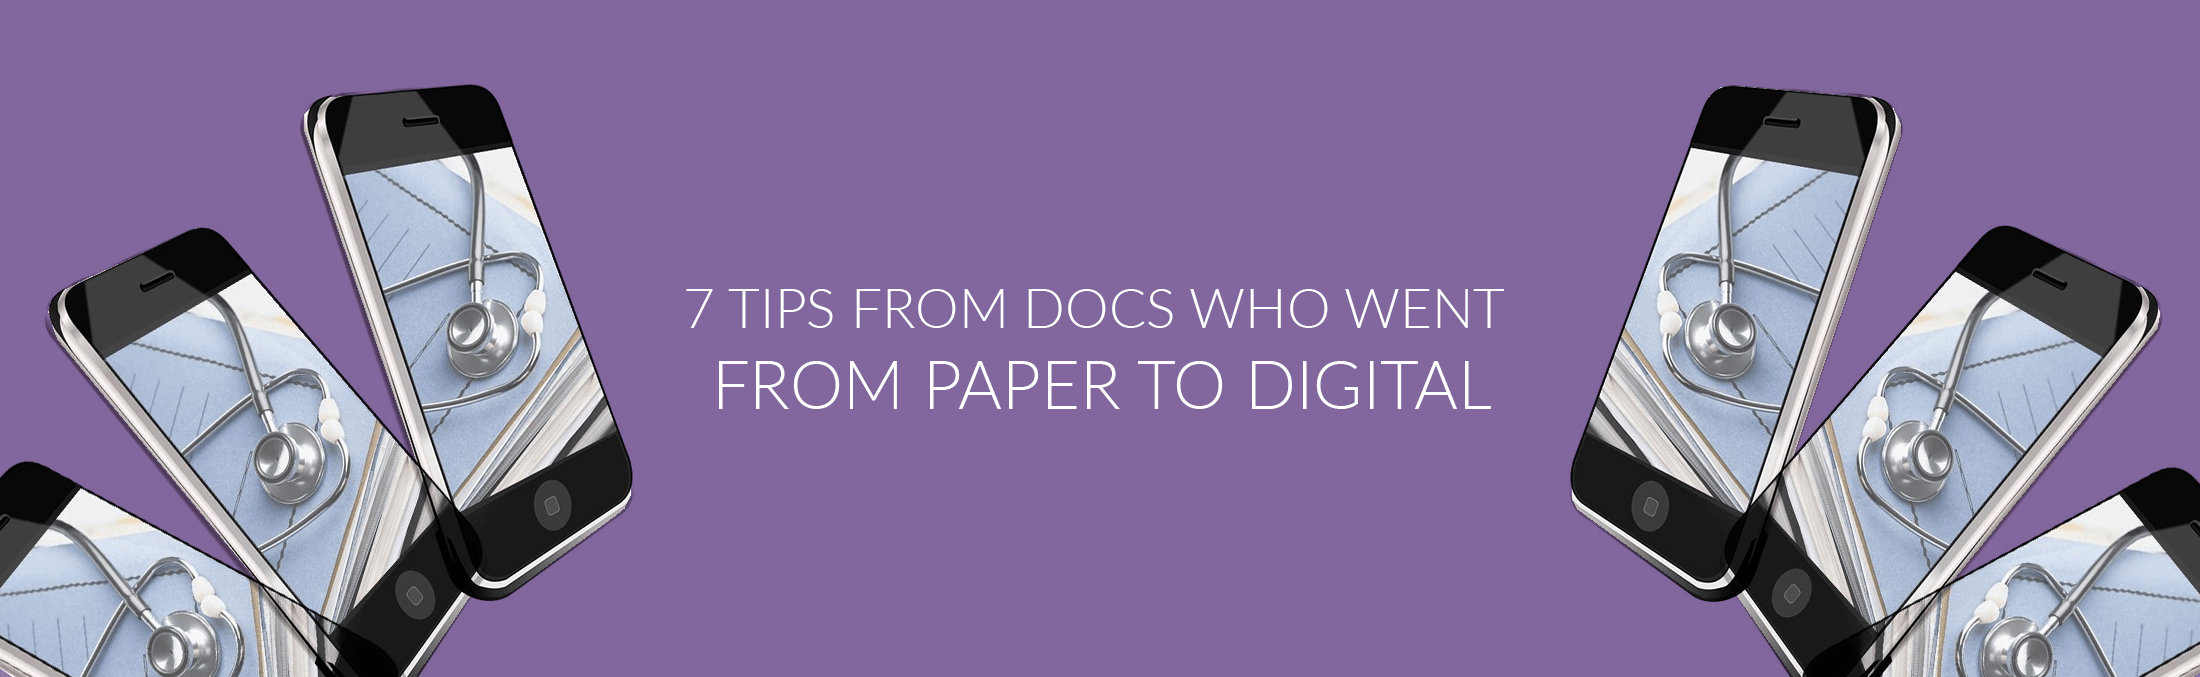 docs tips paper to digital